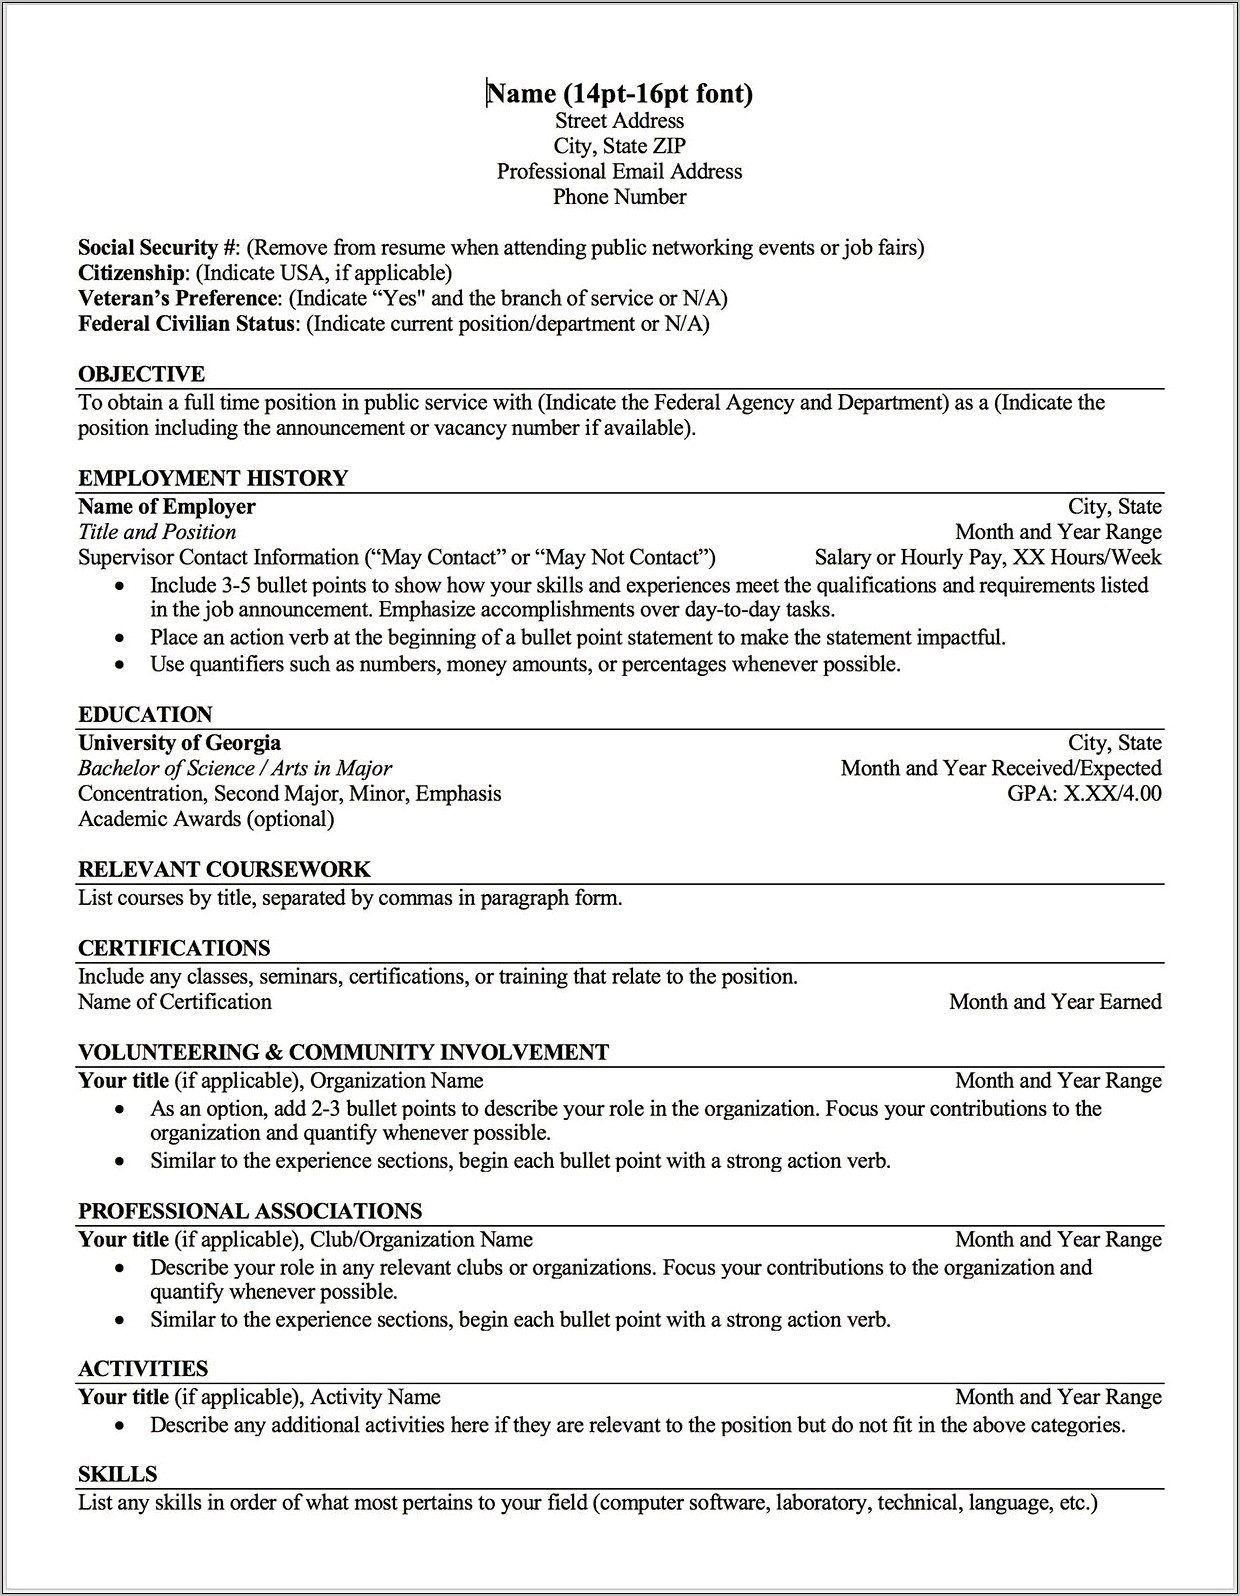 Free Samples Of Federal Resume